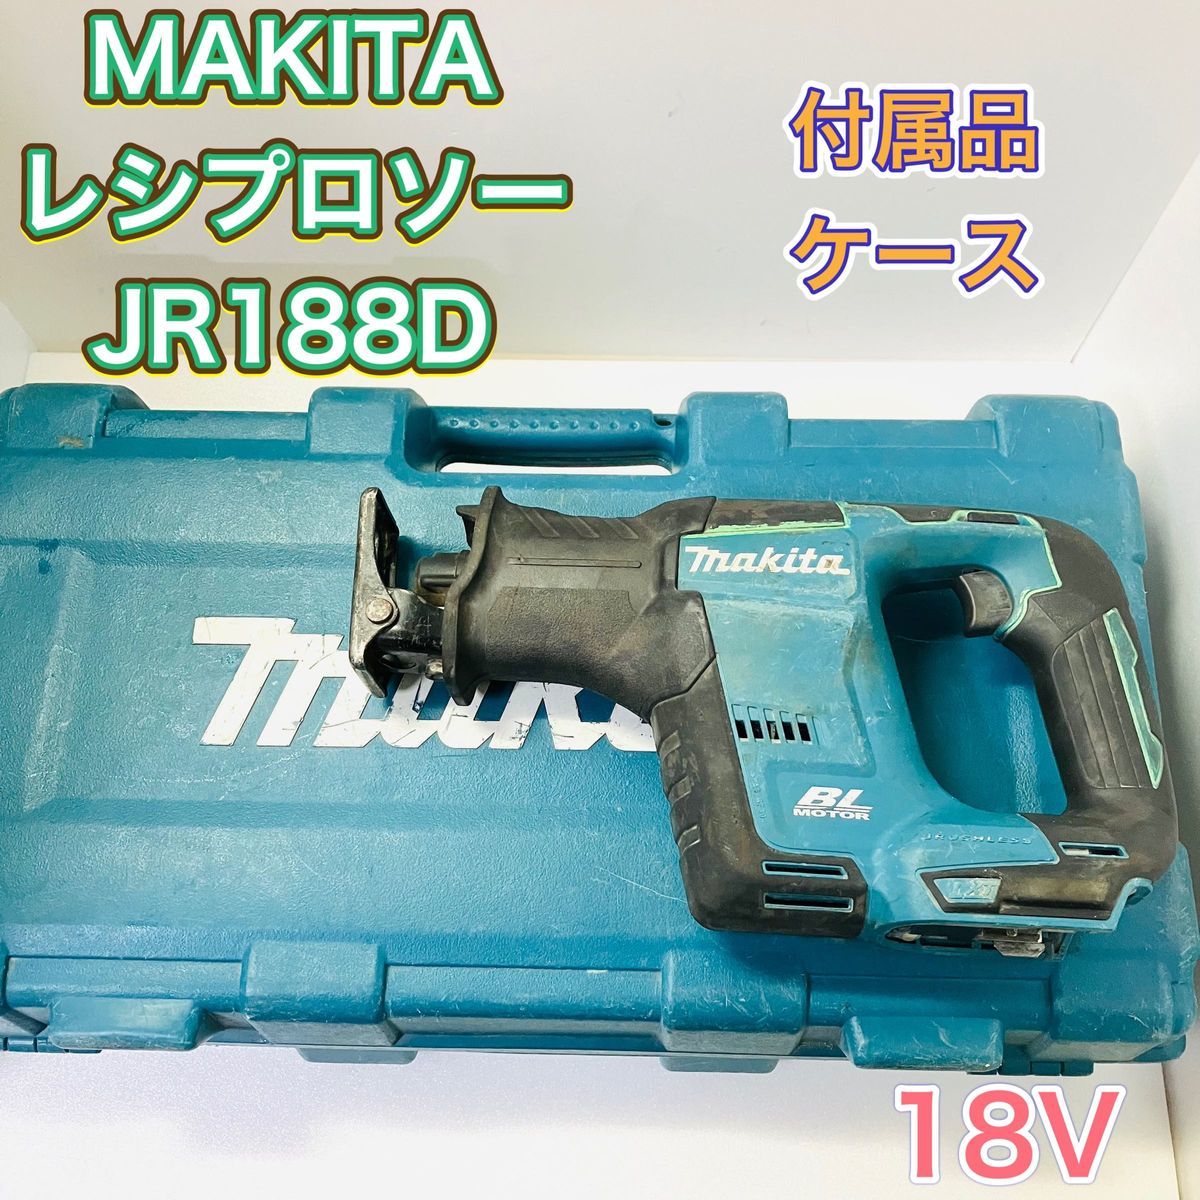 MAKITA マキタ JR188D レシプロソー 充電式 18V 切断工具 電動工具 電ノコ 電動鋸 のこぎり ノコギリ DIY